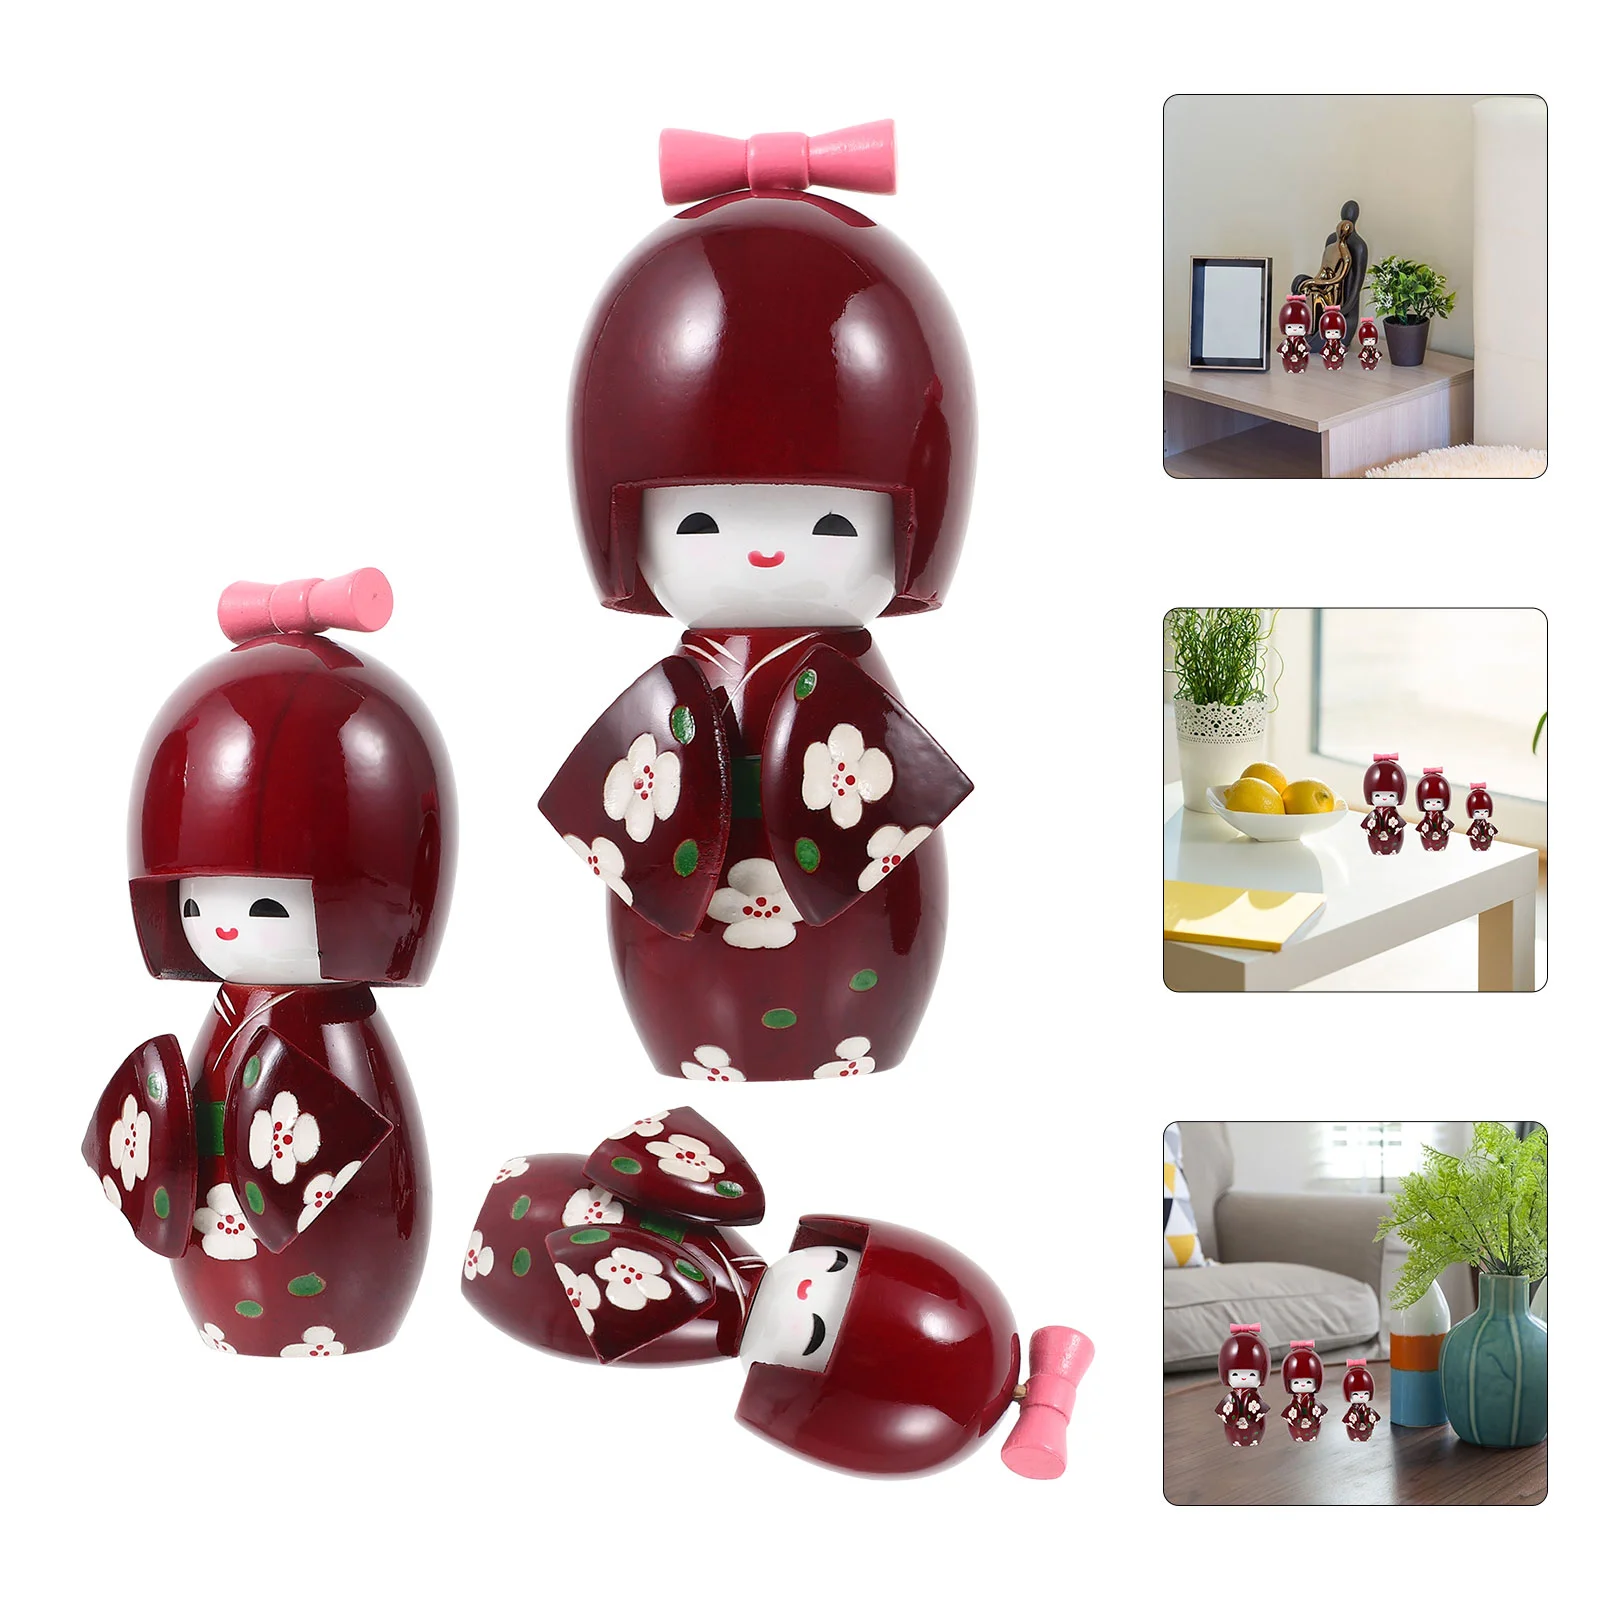 

3 Pcs Japanese Style Kimono Kimonos Desktop Decor Gift Ornament Decors Wood Dolls Home Decorate Sculptures Figurines